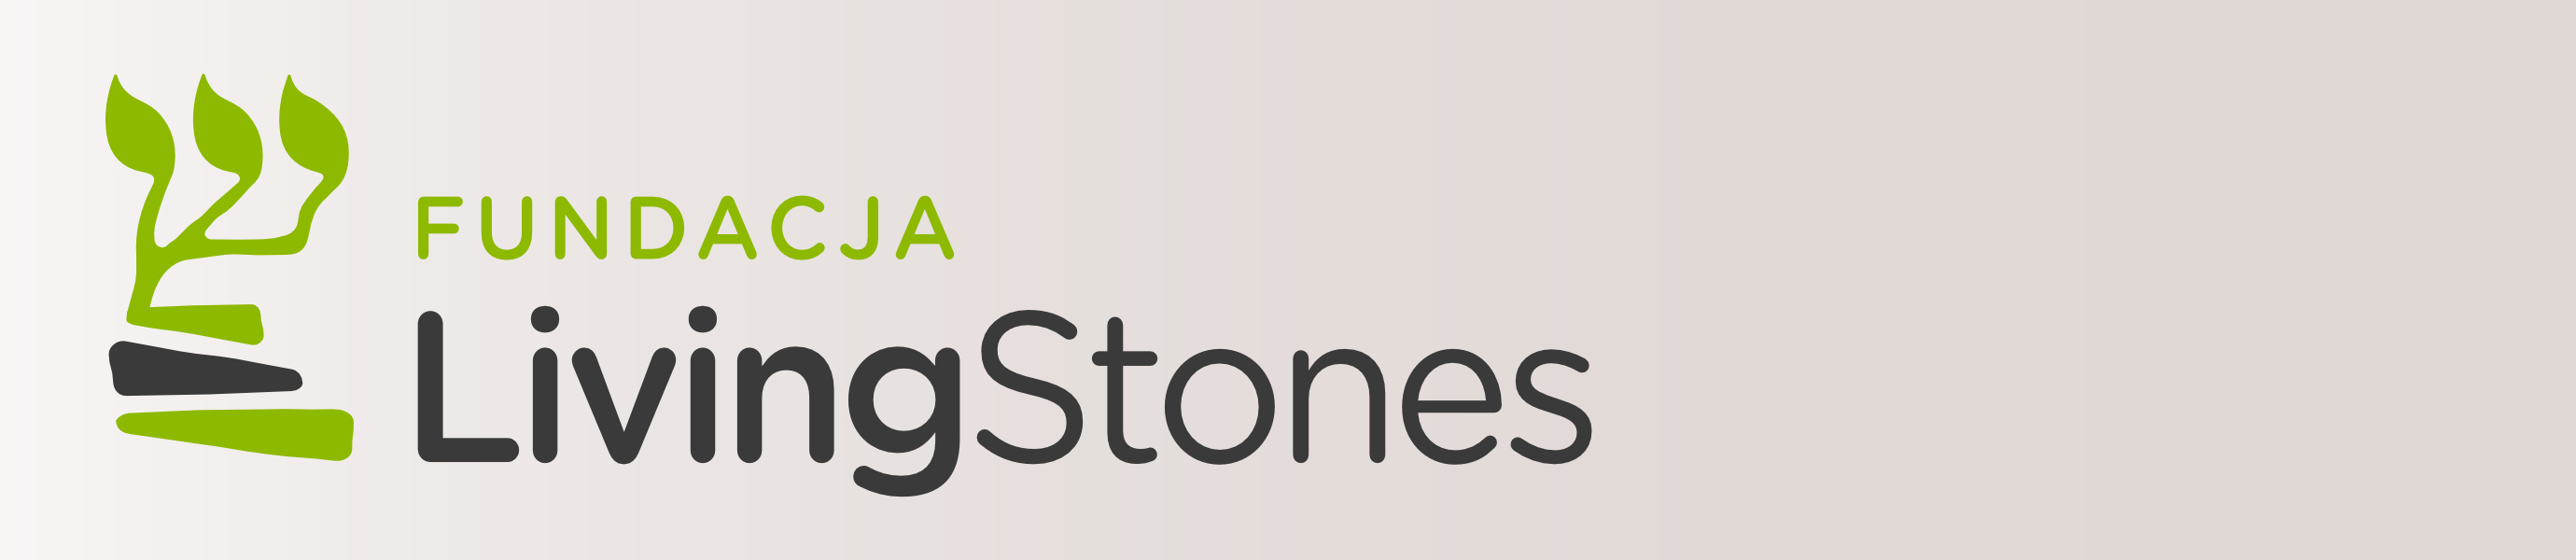 Fundacja Living Stones website logo